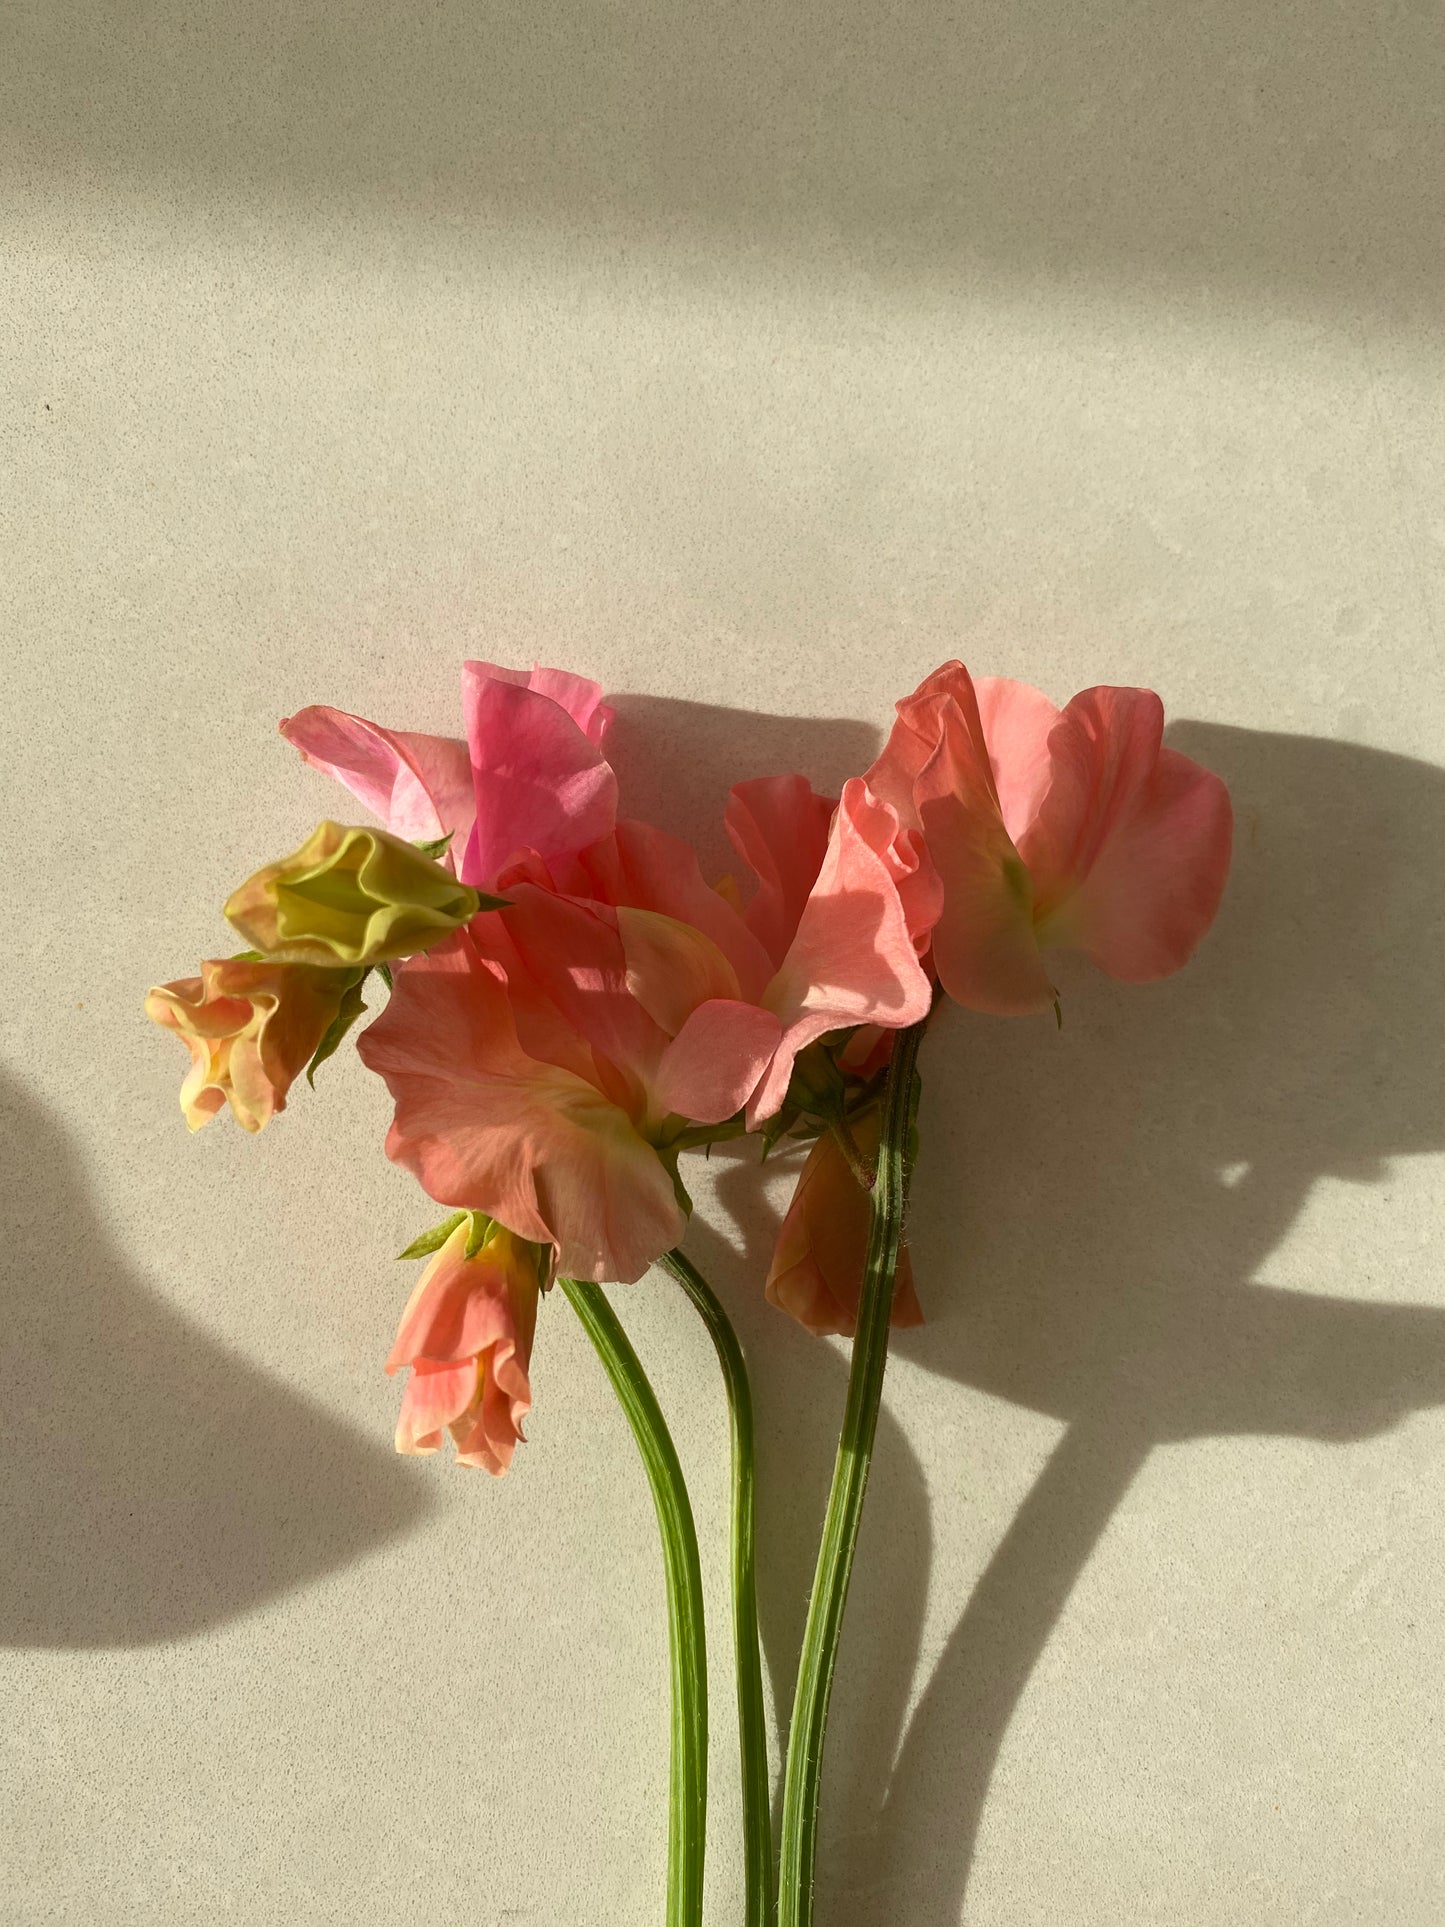 Lathyrus Odoratus - Sweet Pea Spring Sunshine Peach